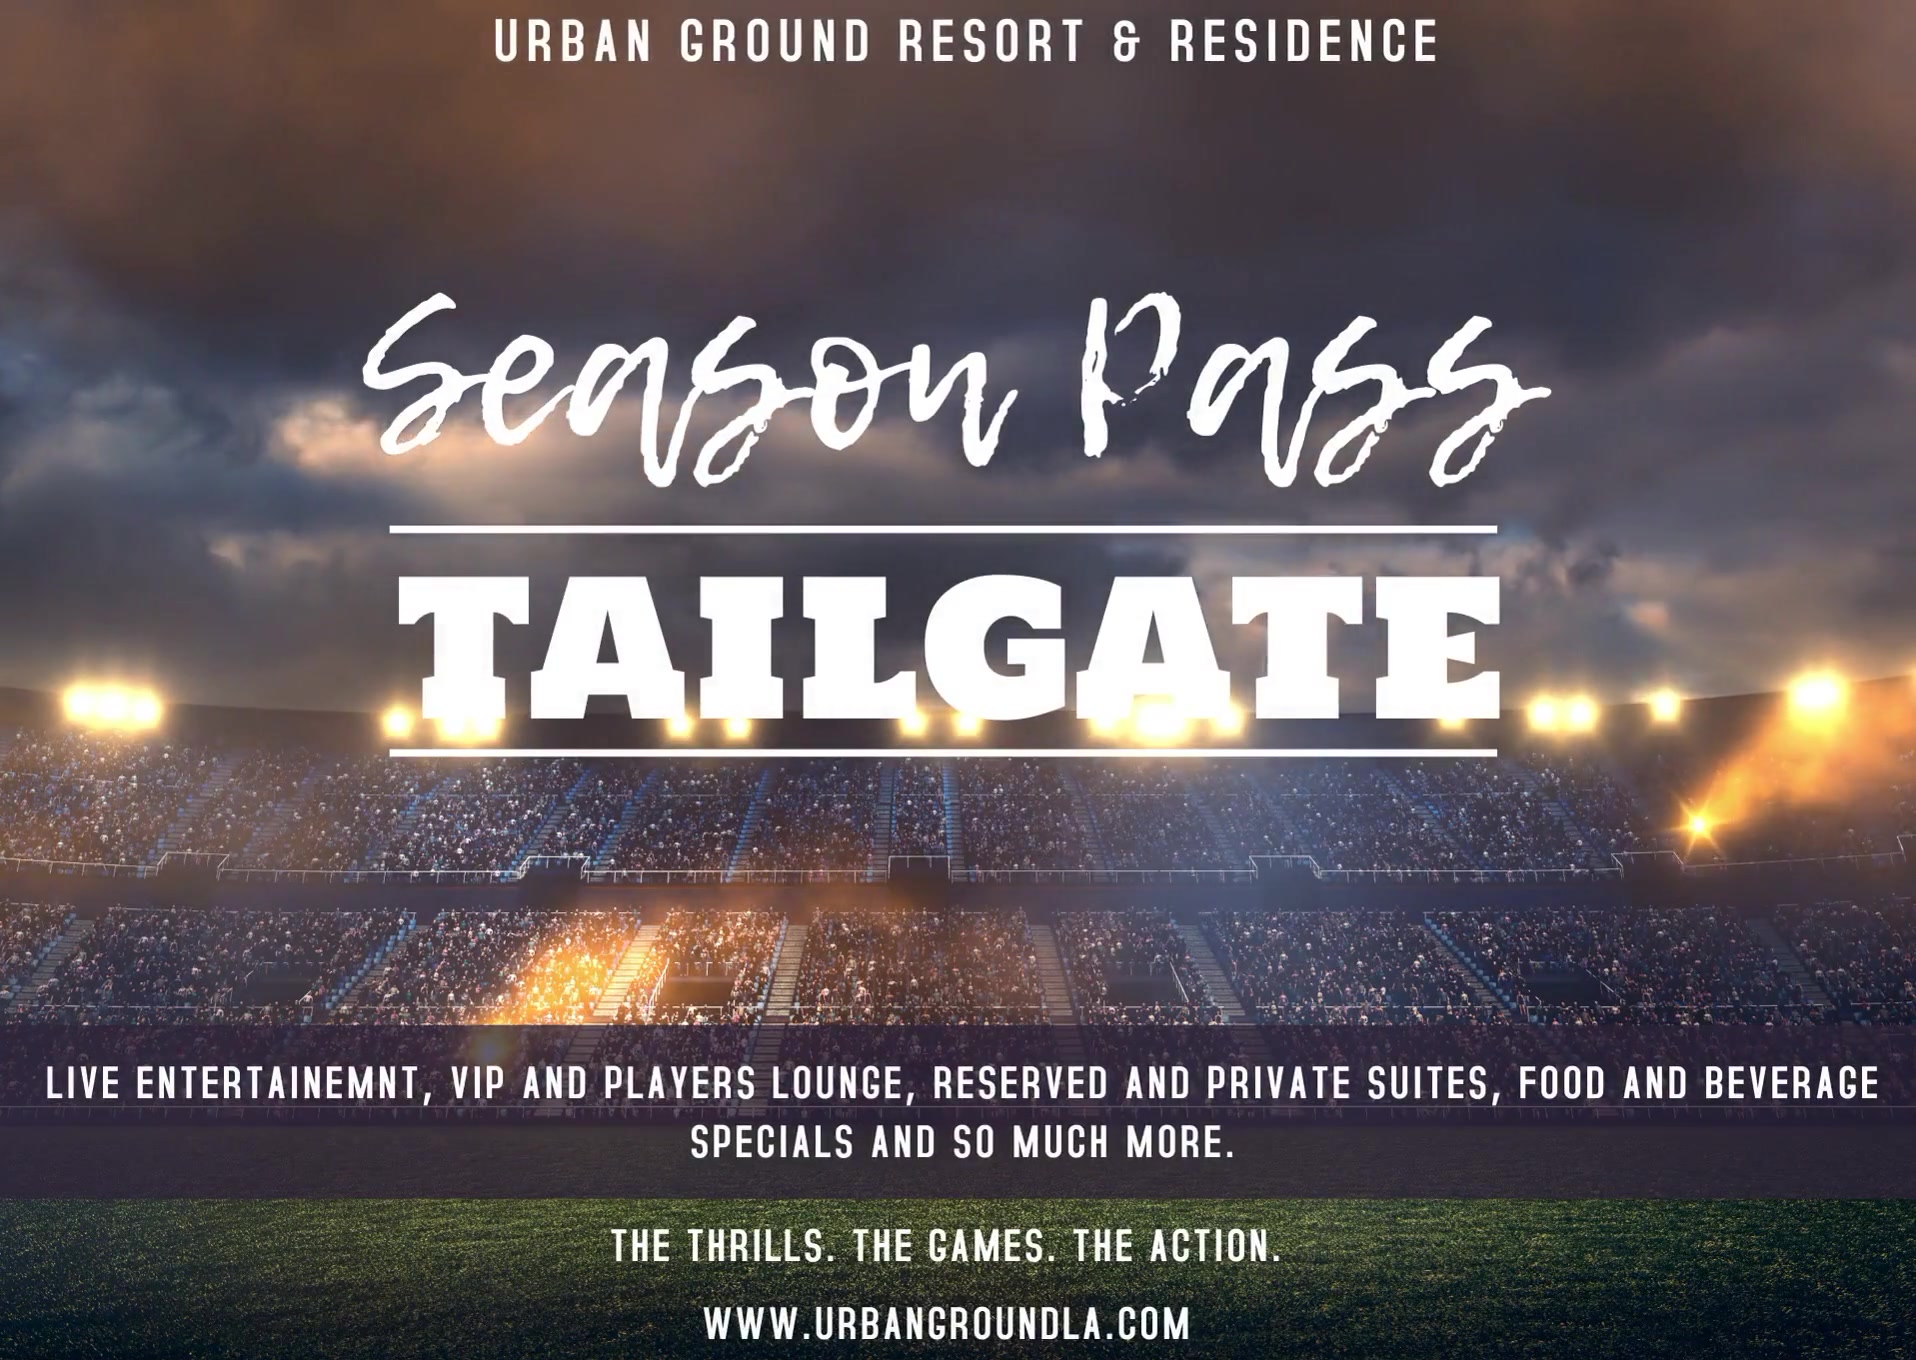 Urban Ground Resort & Residence Season Pass Tailgate